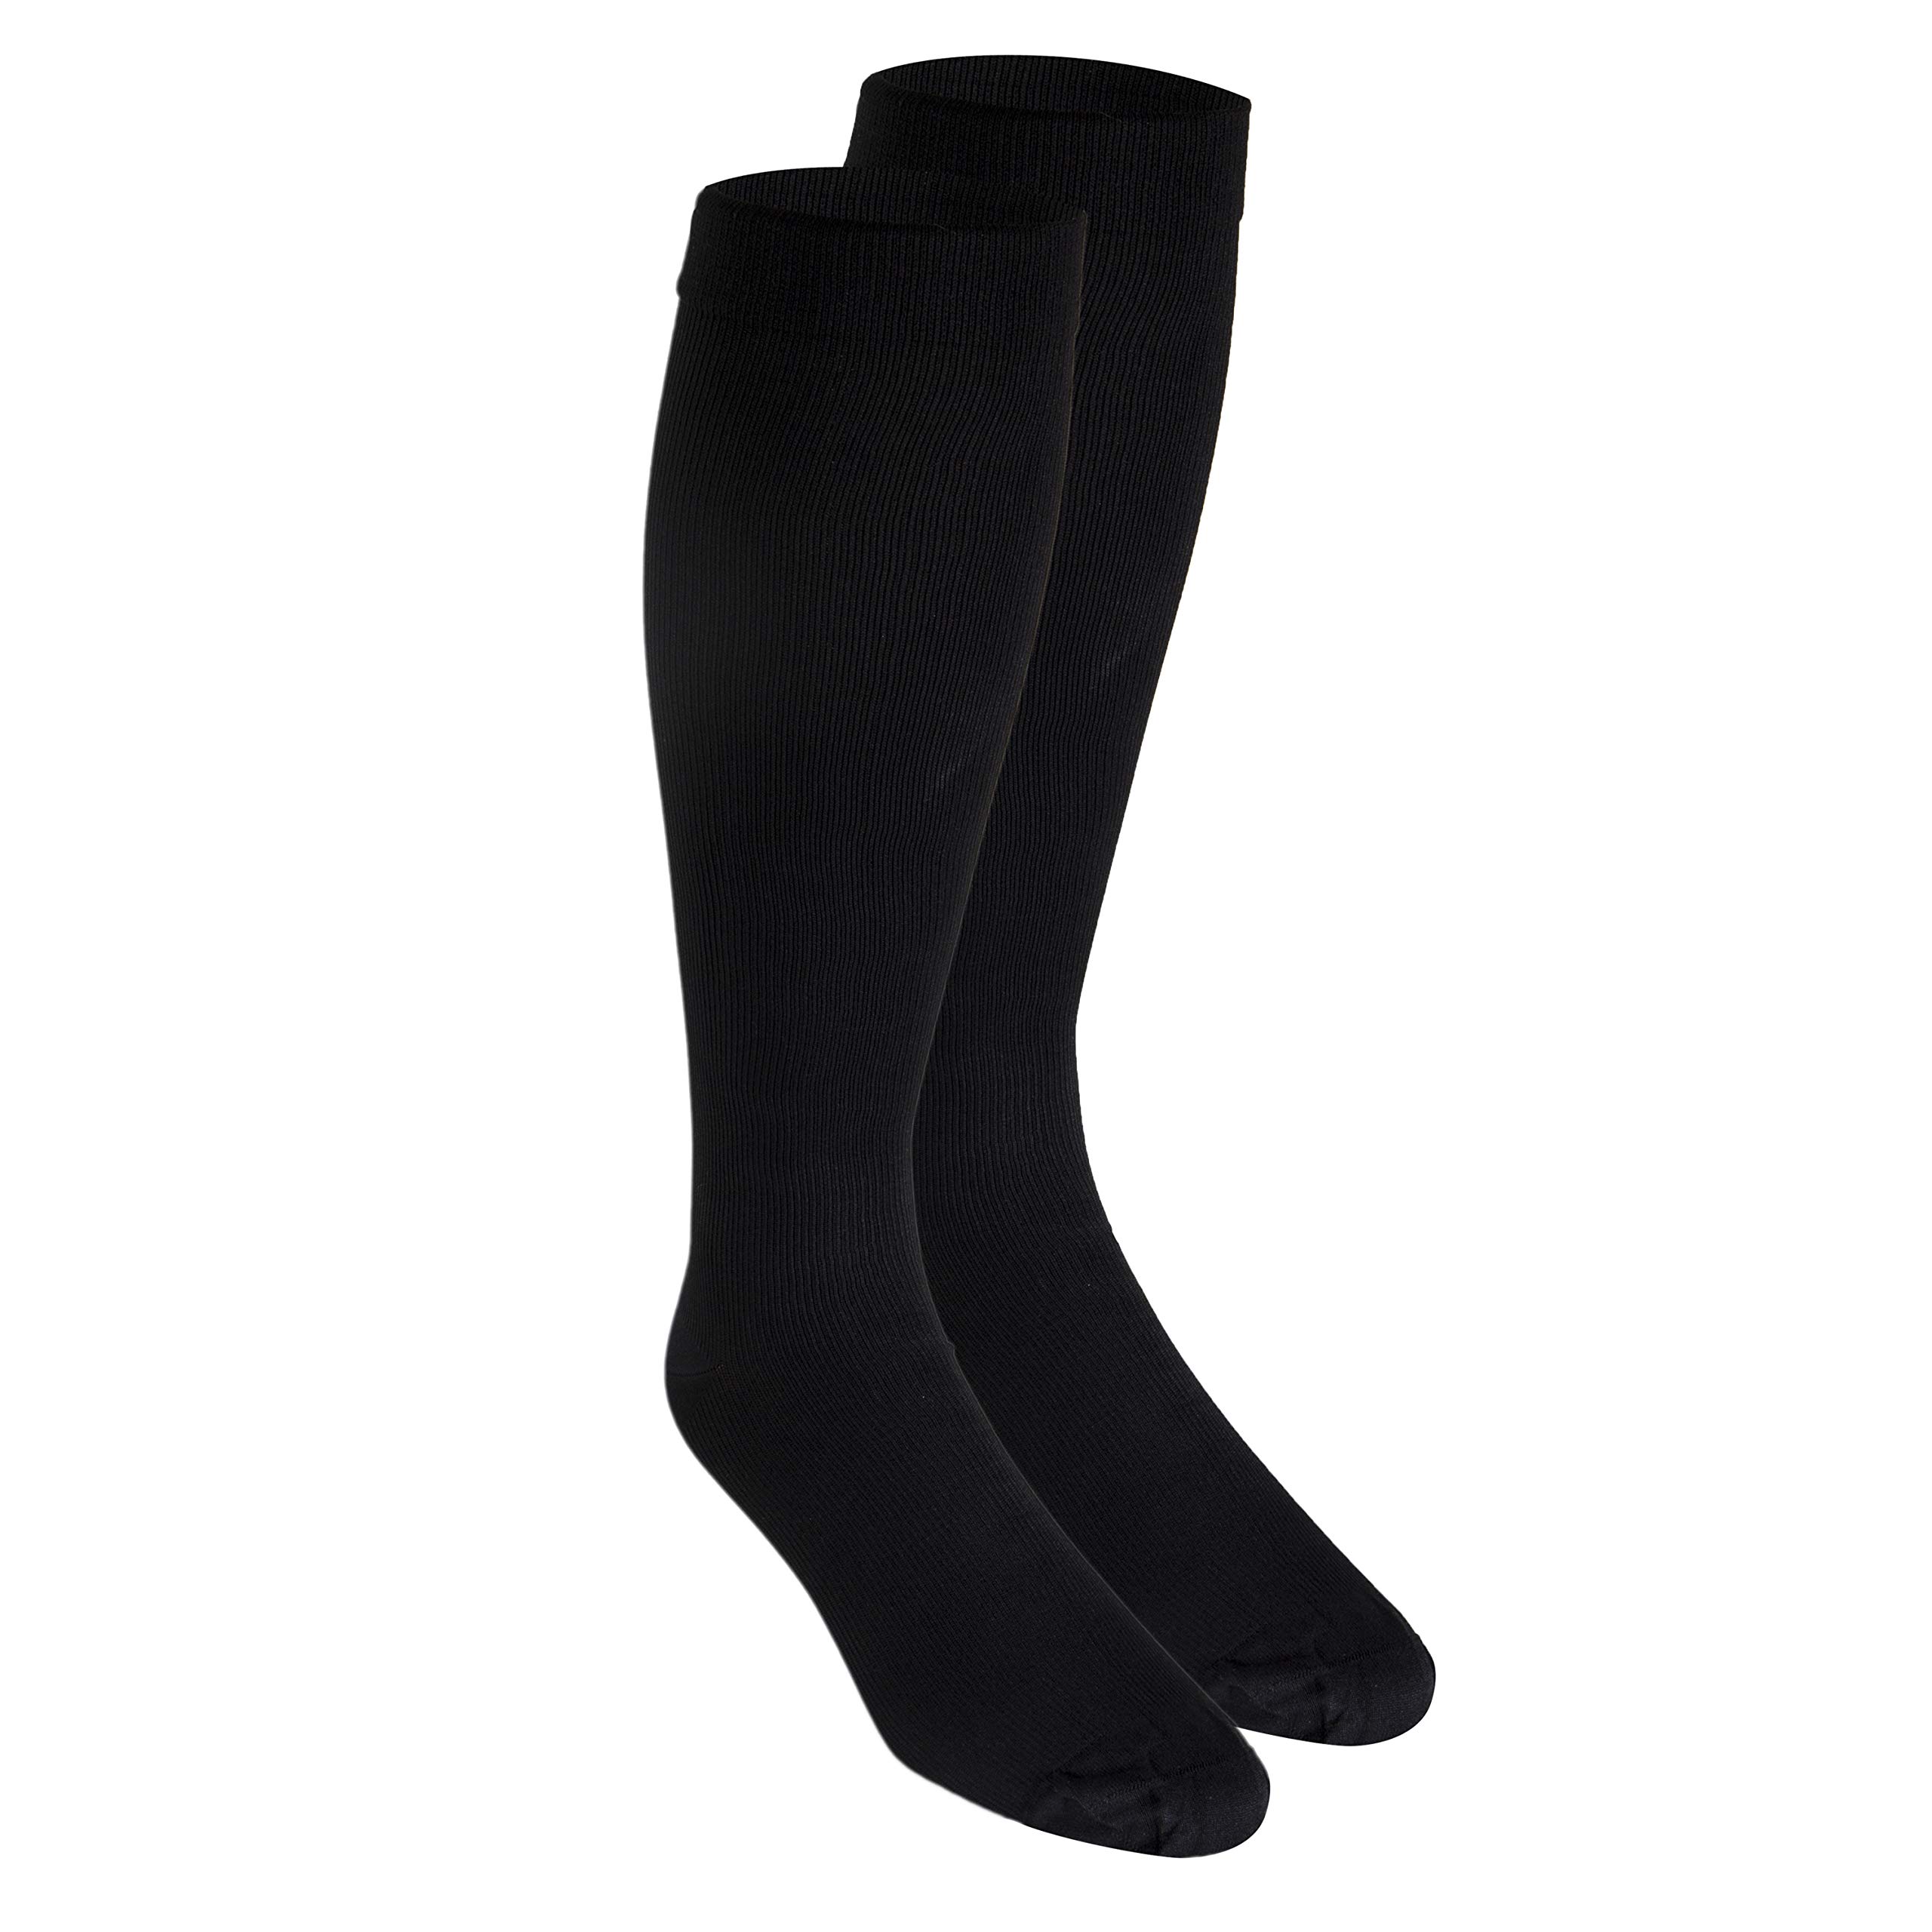 Truform Compression Socks, 15-20 mmHg, Men's Dress Socks, Knee High Over Calf Length